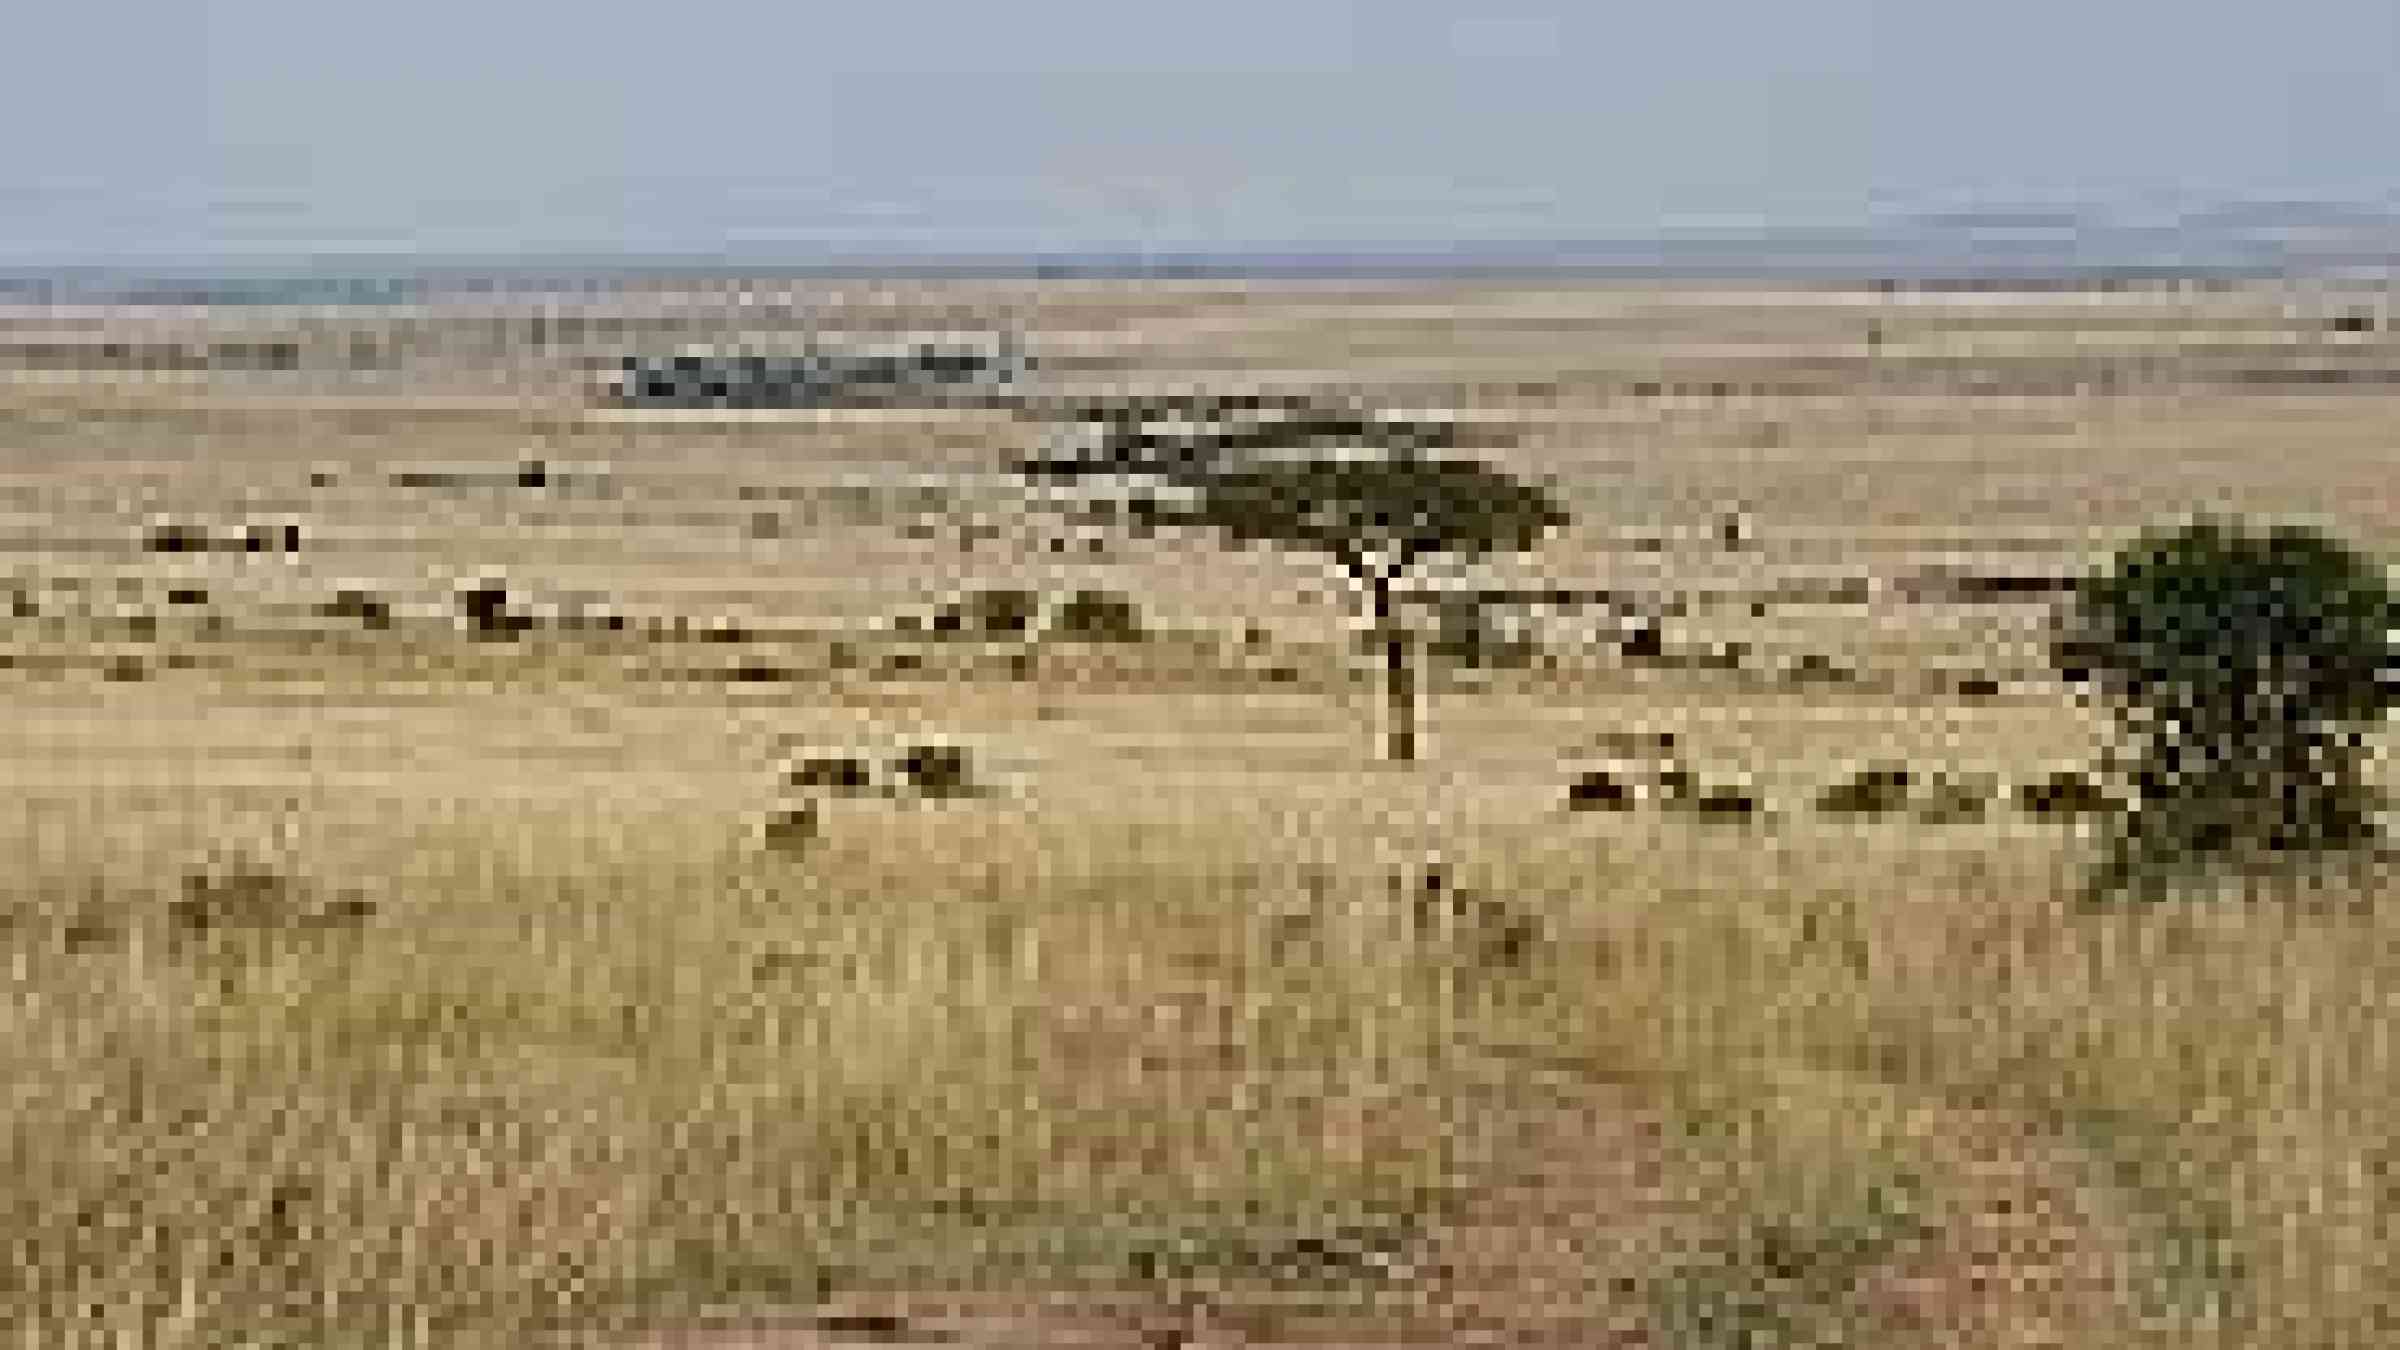 Photo of Masai Mara National Reserve, Kenya, by Julian Mason, Creative Commons Attribution-Noncommercial 2.0 Generic